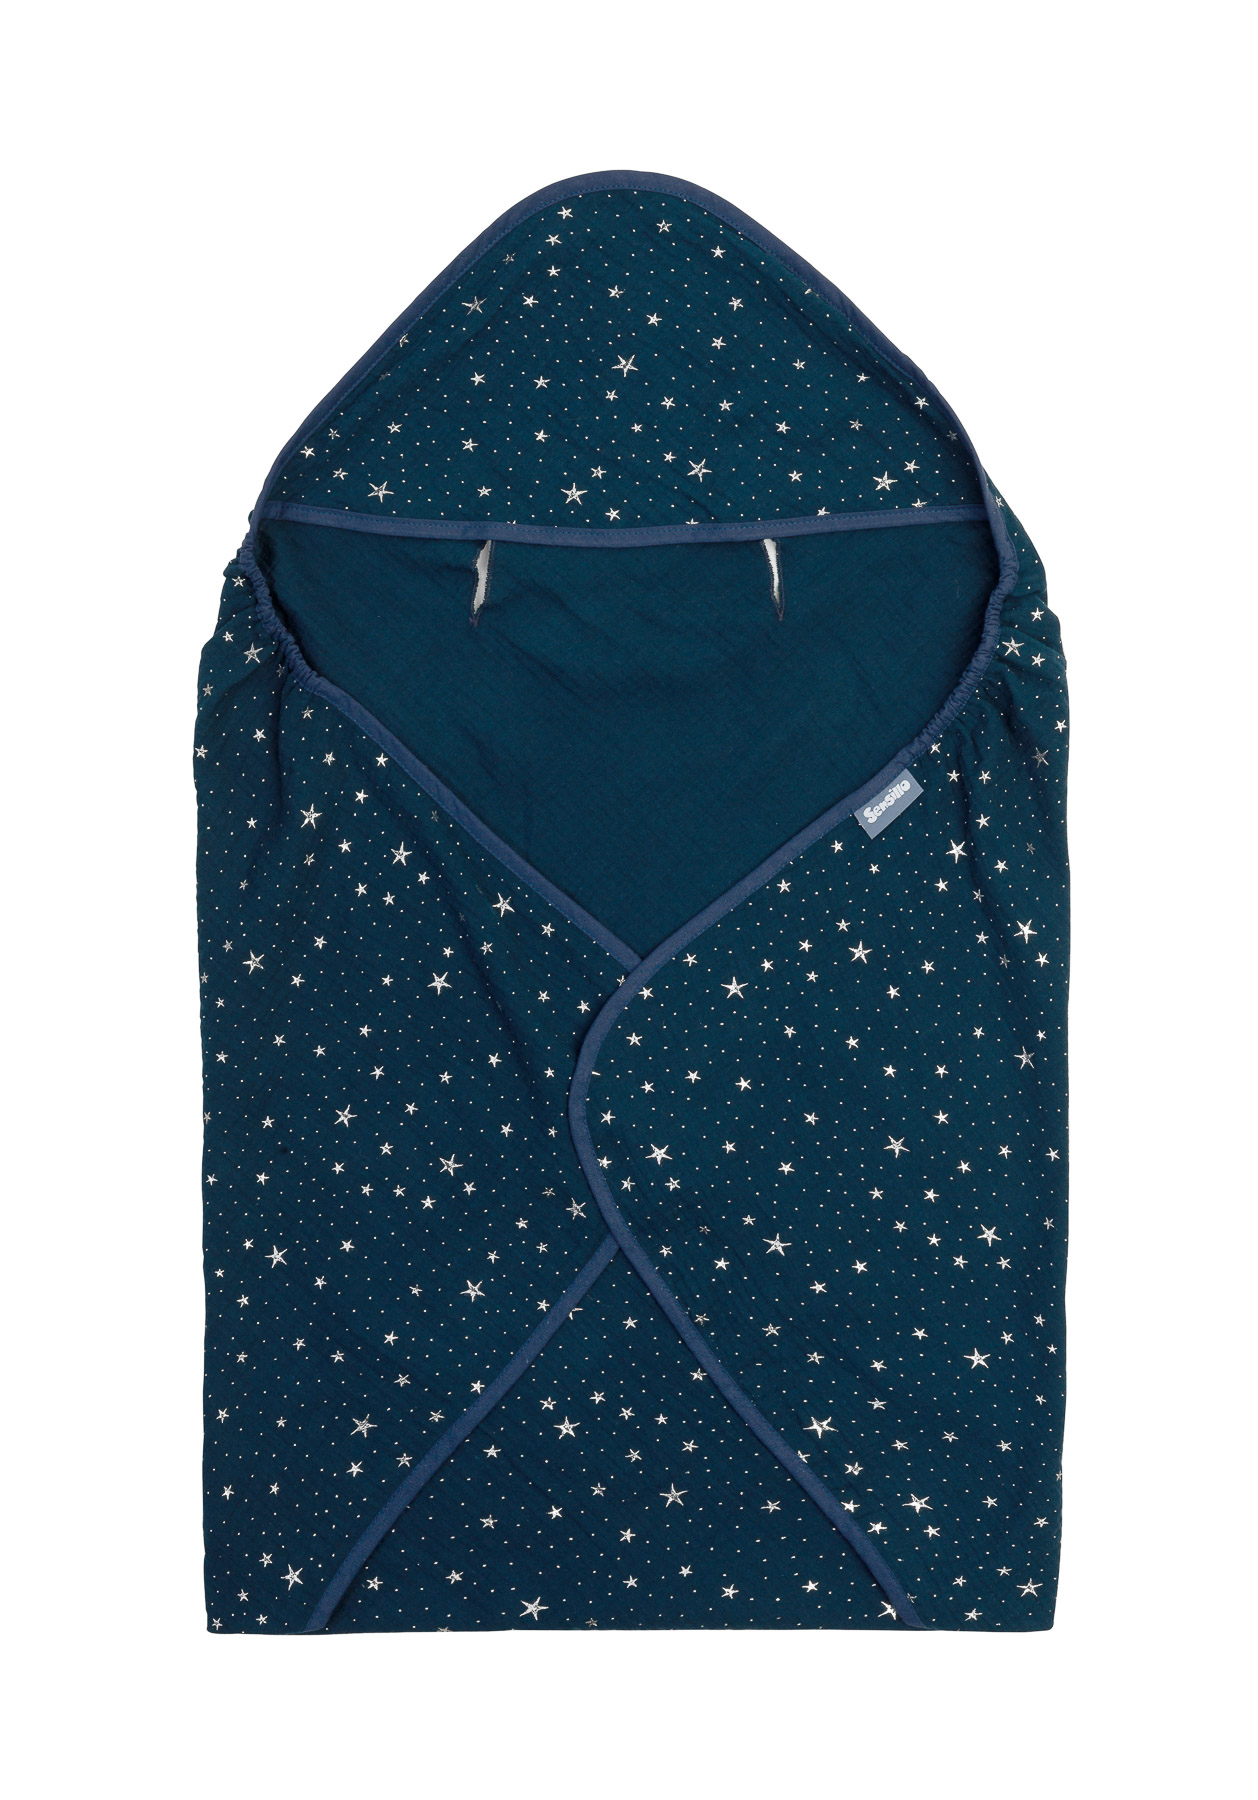 Child seat muslin swaddle blanket for summer – navy blue stars